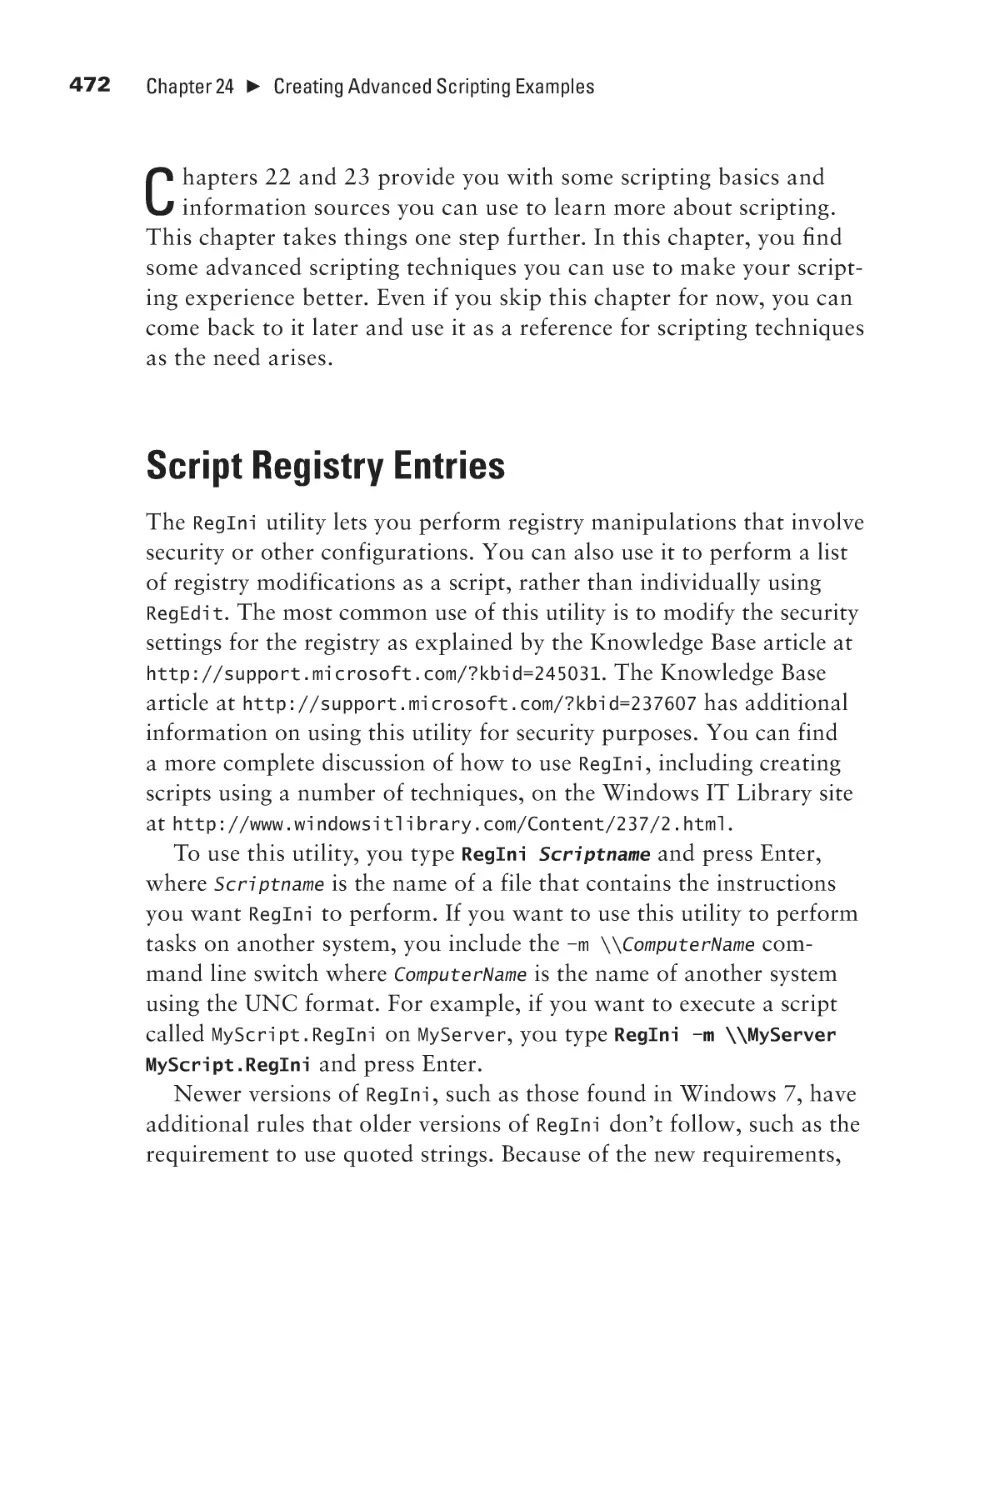 Script Registry Entries